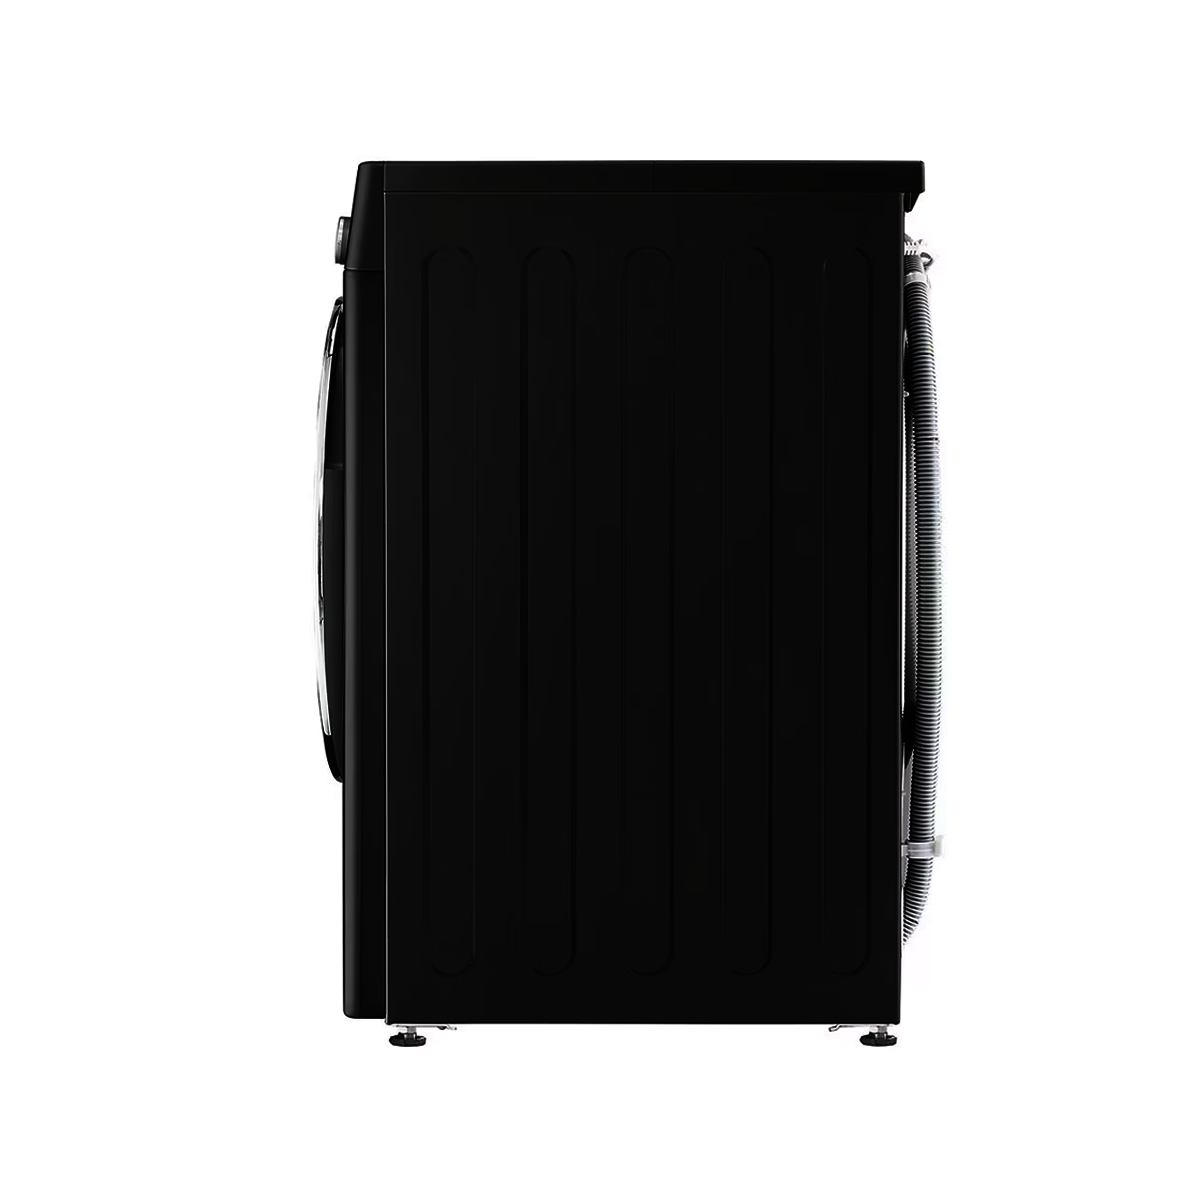 LG 10.5/7KG F4V5RGPYJE Front Load Inverter (Wash & Dry) Washing Machine